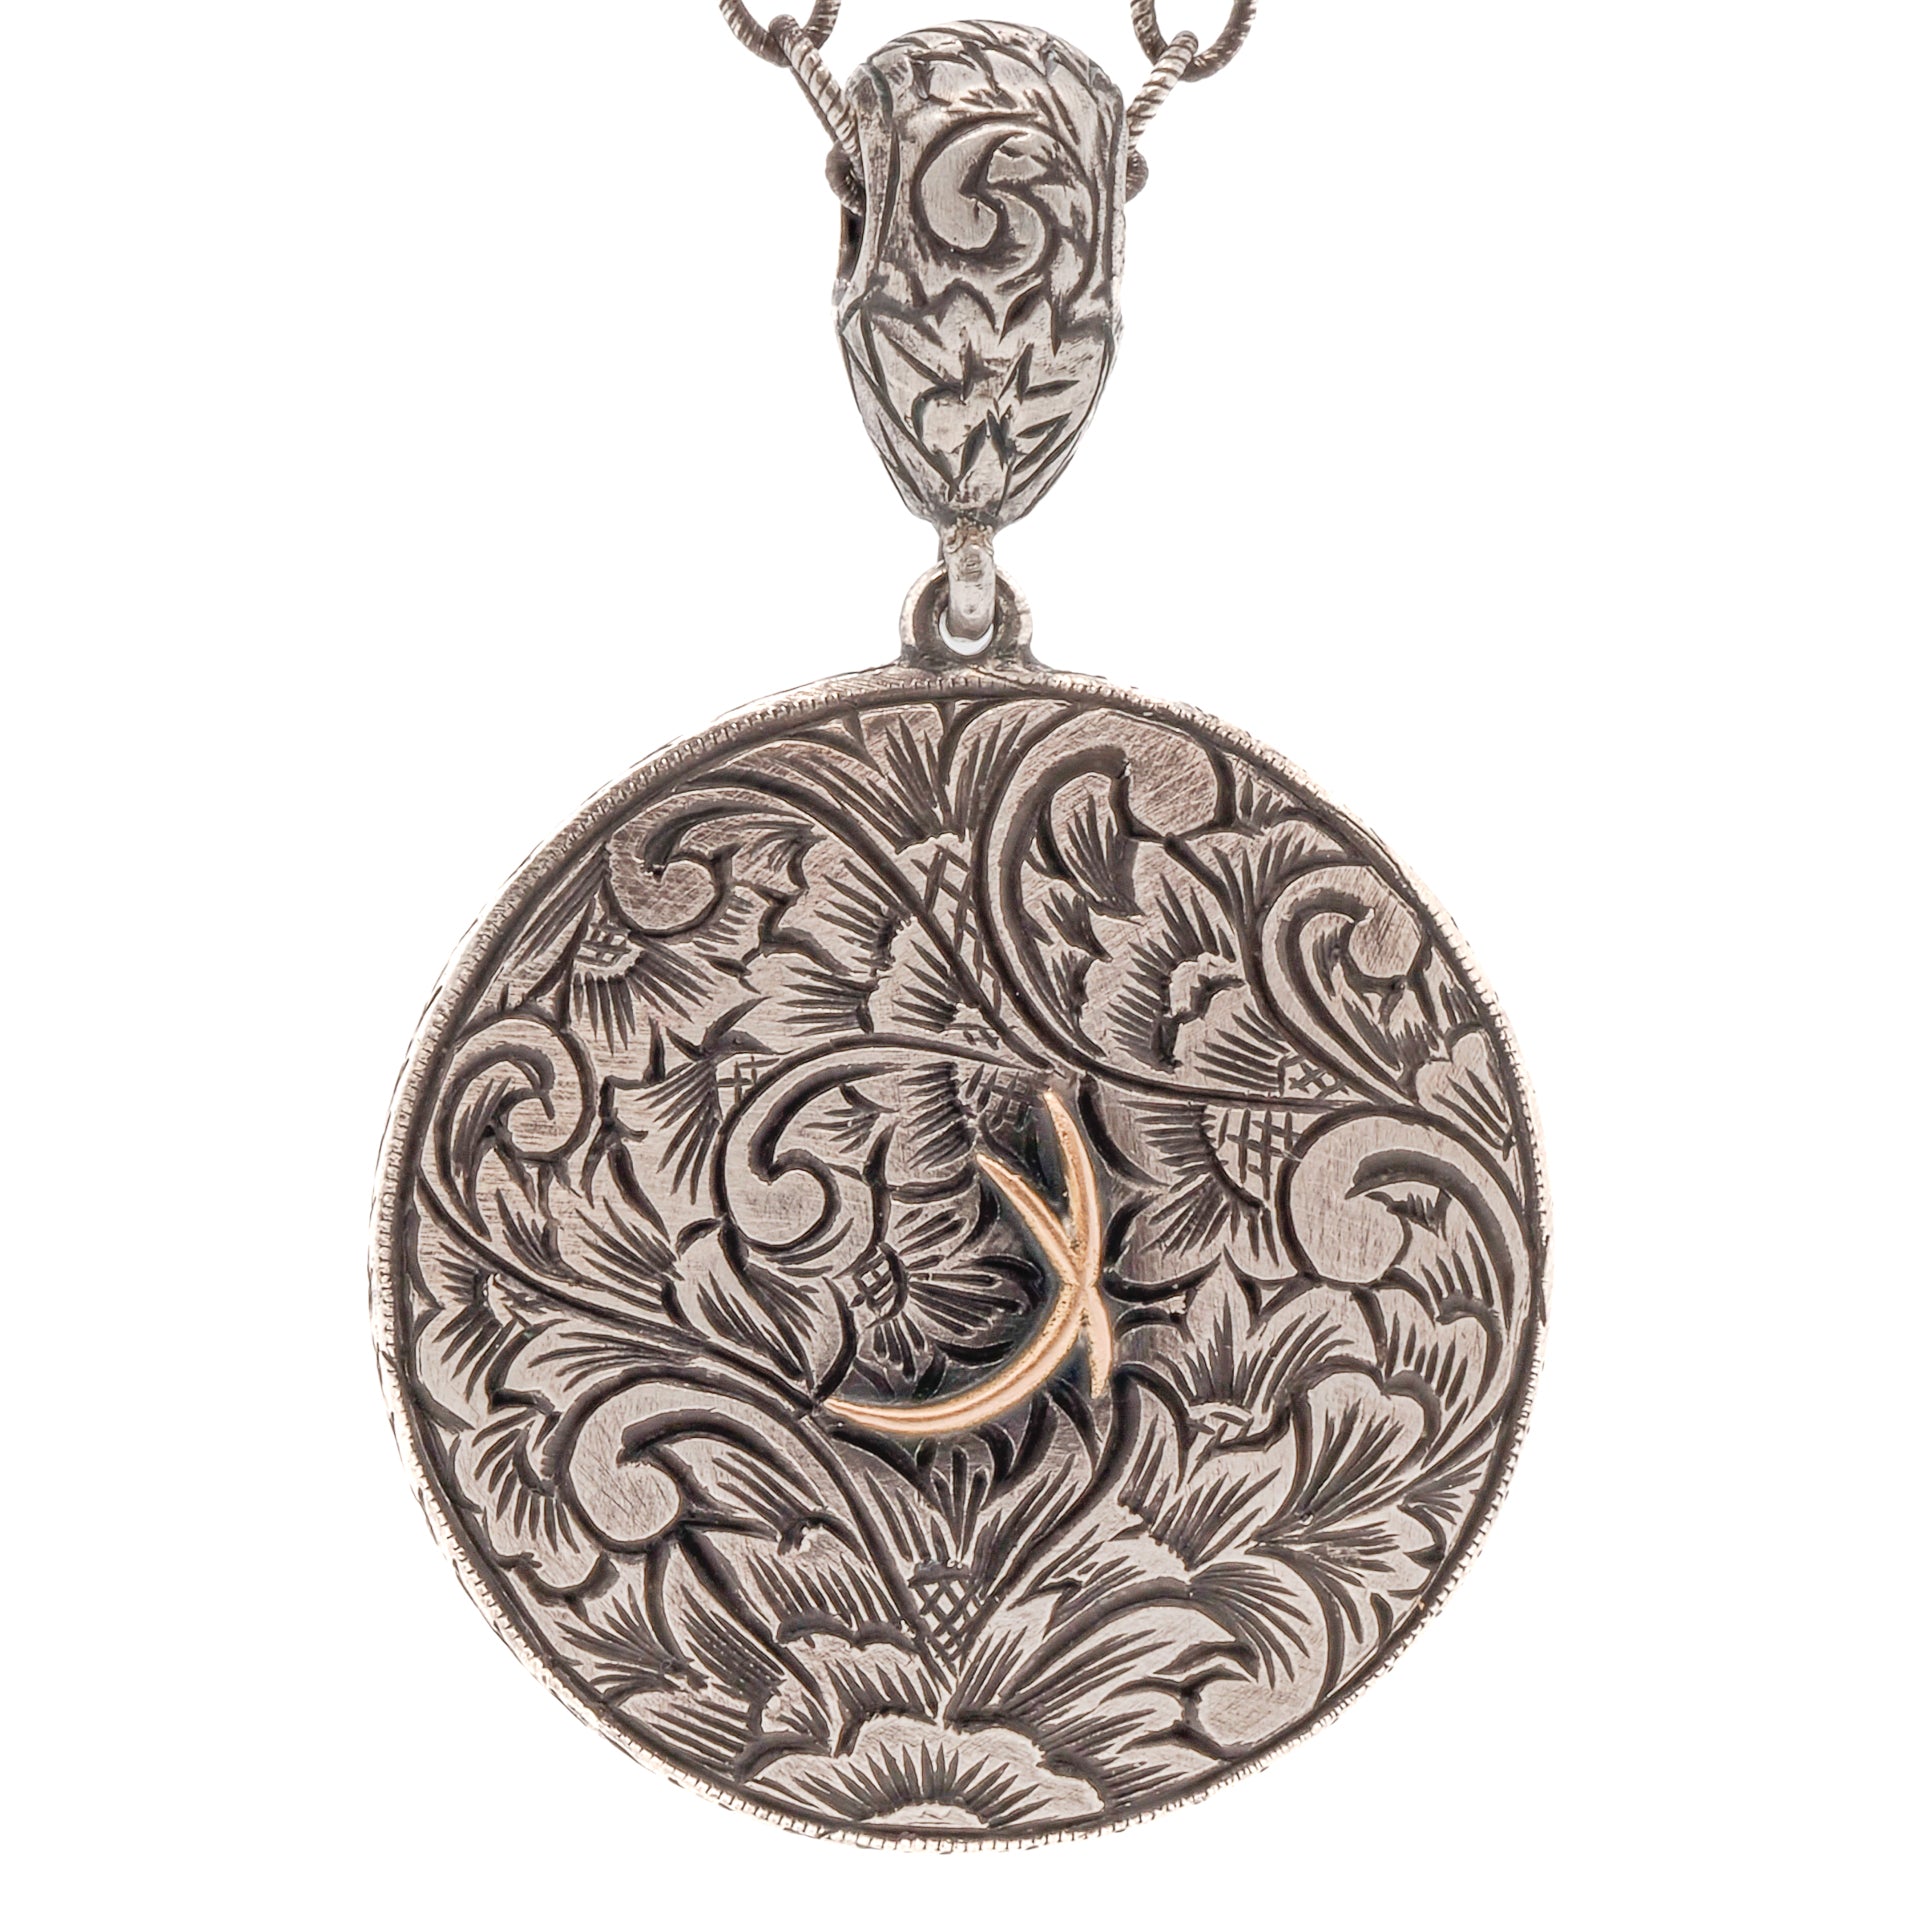 Handmade Eye of Ra Necklace - A Beautiful and Symbolic Piece of Fine Jewelry